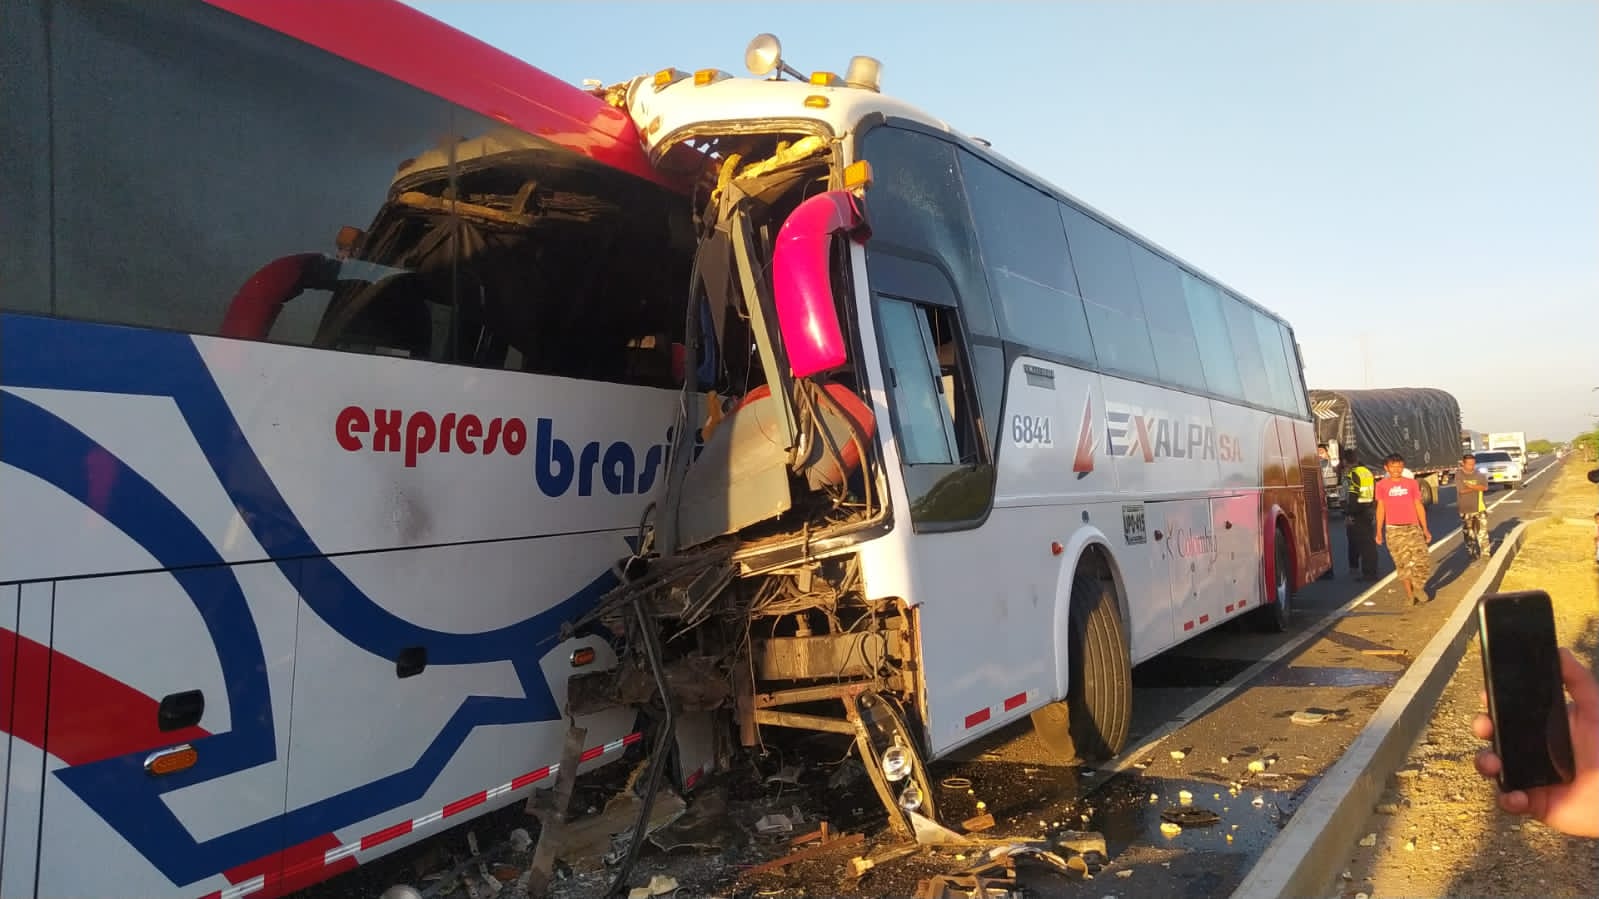 Fuerte choque entre dos buses, varios pasajeros quedaron atrapados